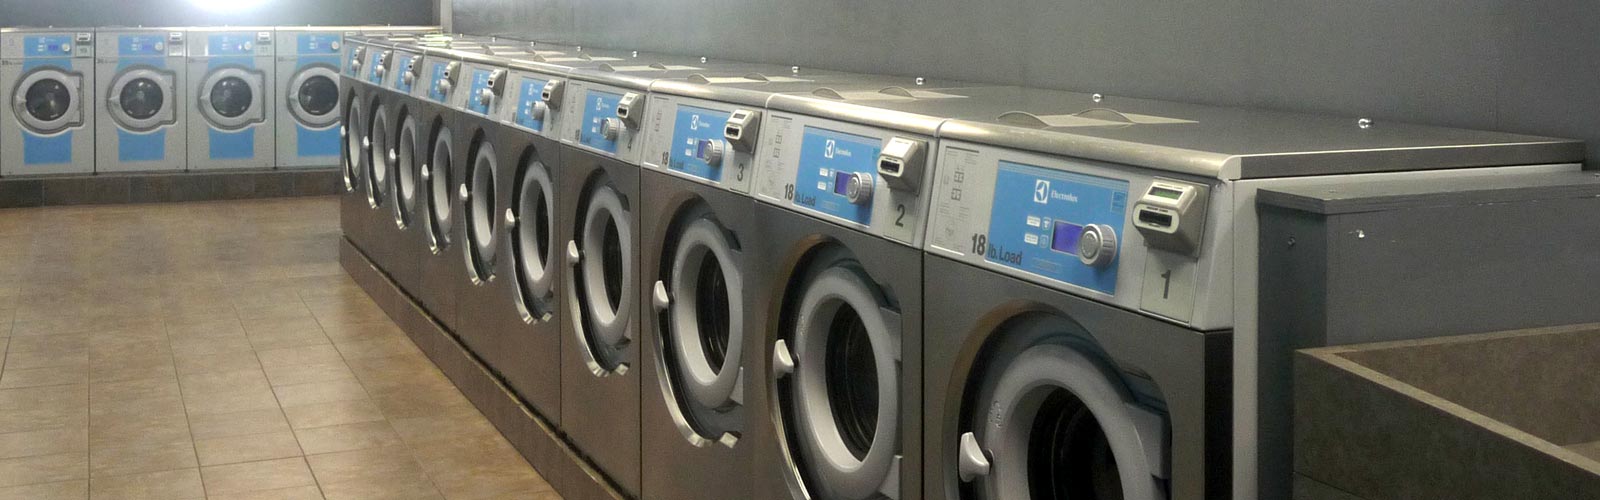 New Oxford laundrymat